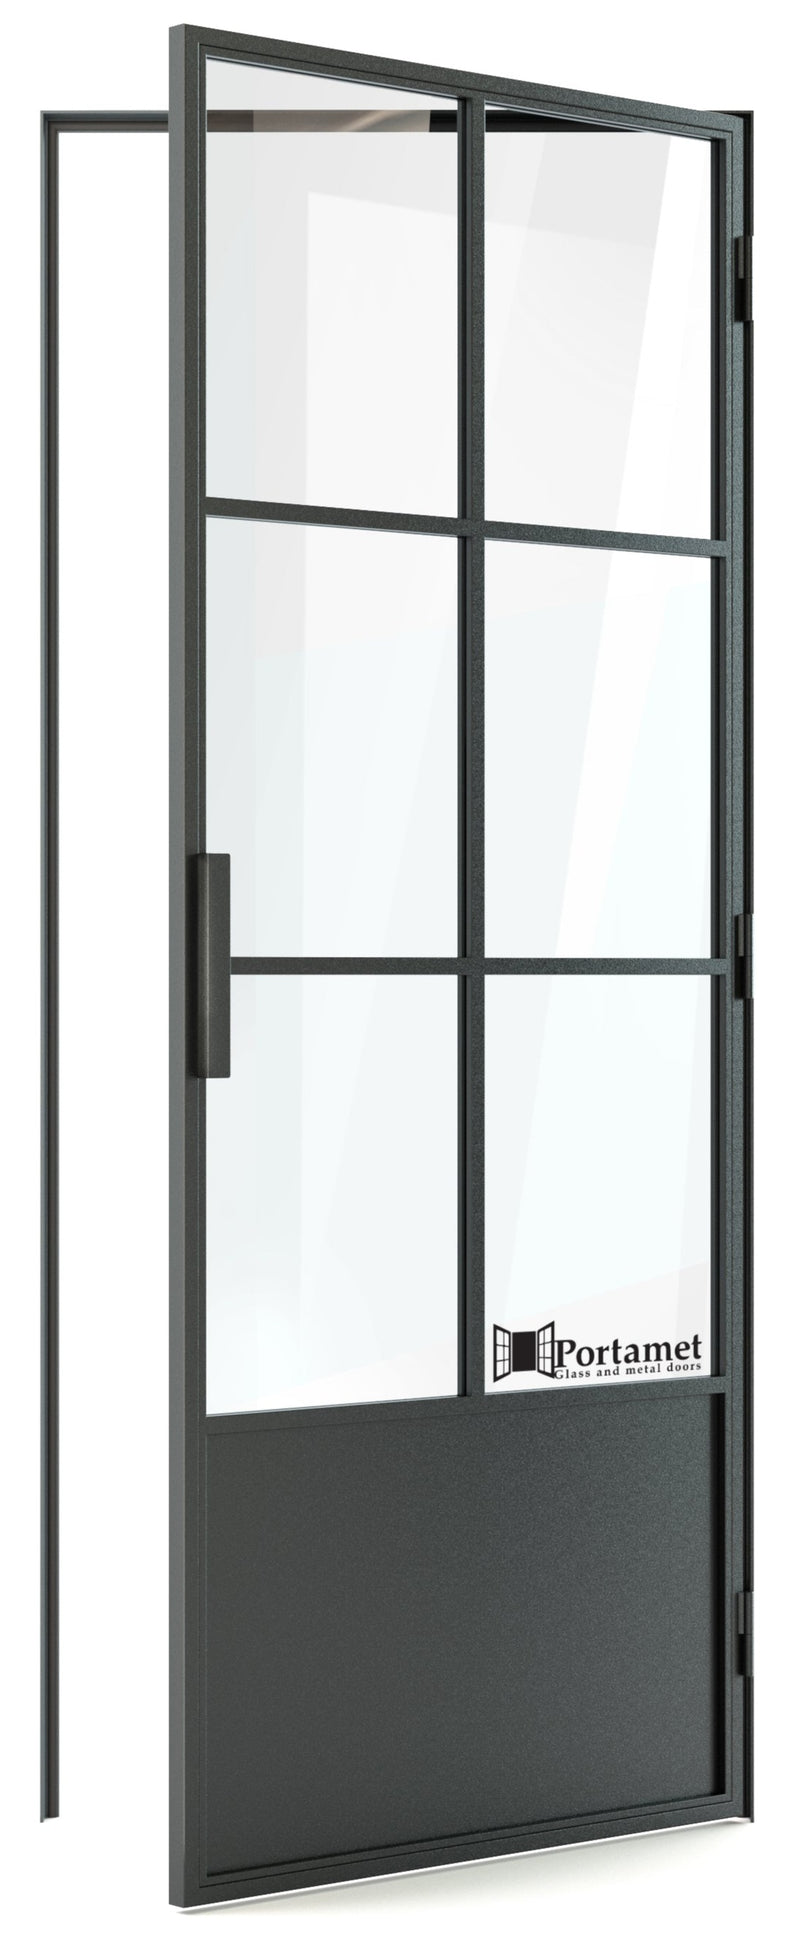 Portamet by Sfarzo - Barcelona Classic Single Glazed Steel Hinged Door with Frame